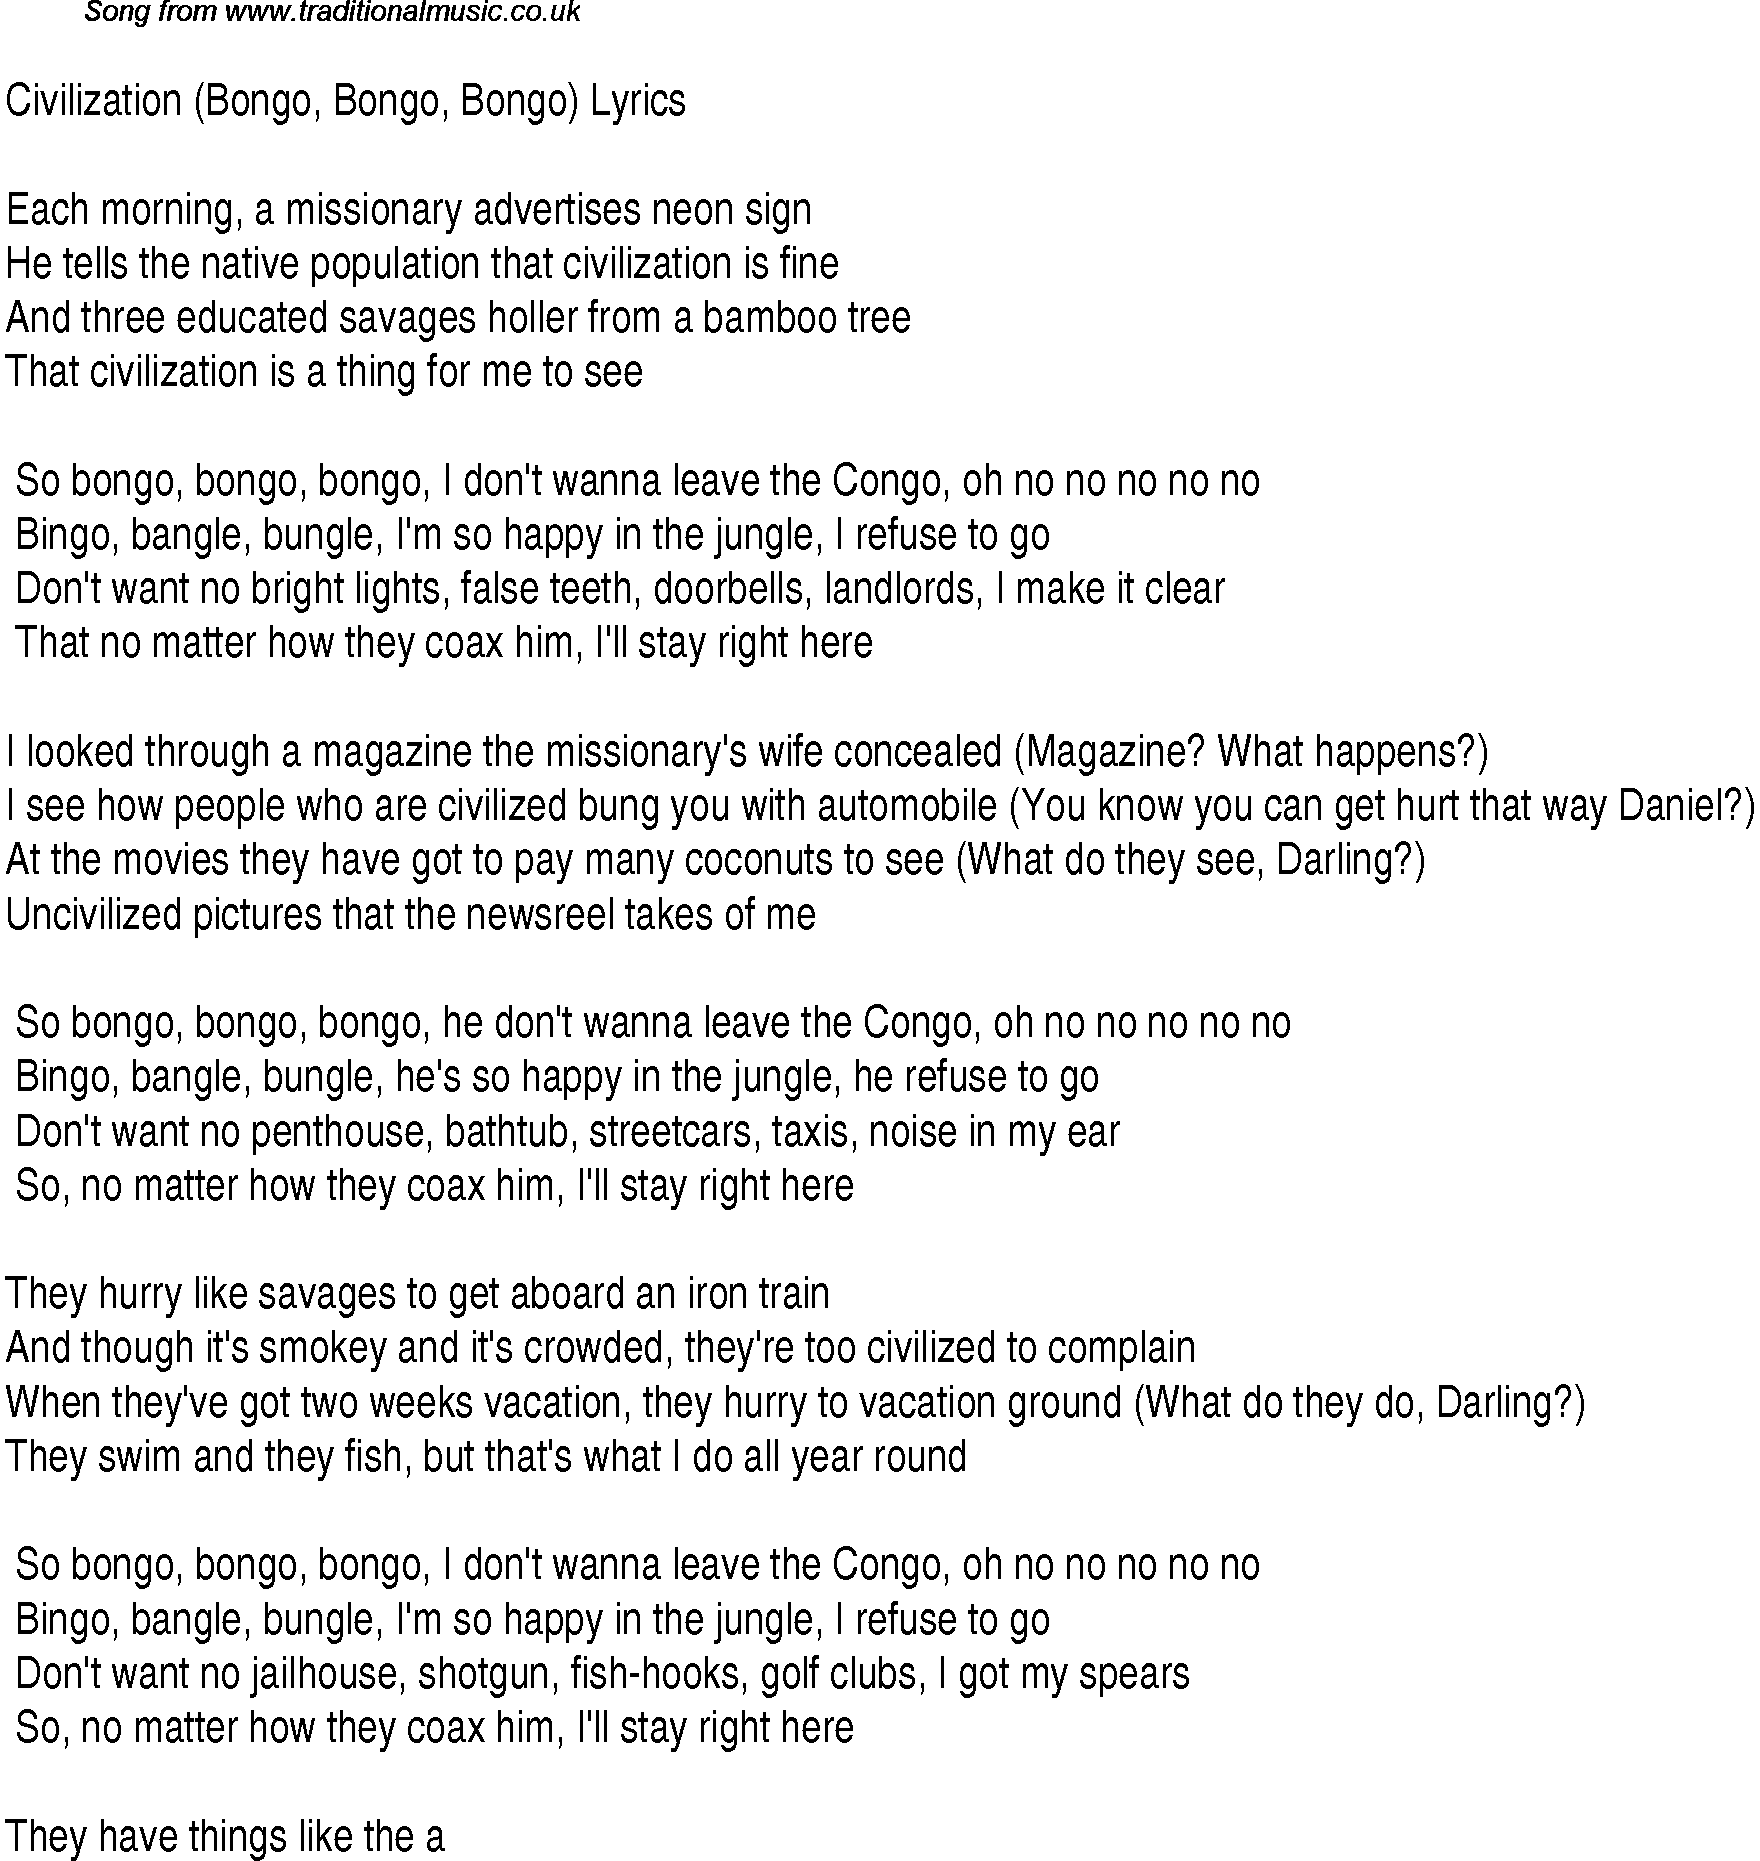 1940s top songs - lyrics for Civilization Bongo Bongo Bongo(Andrews Sisters)